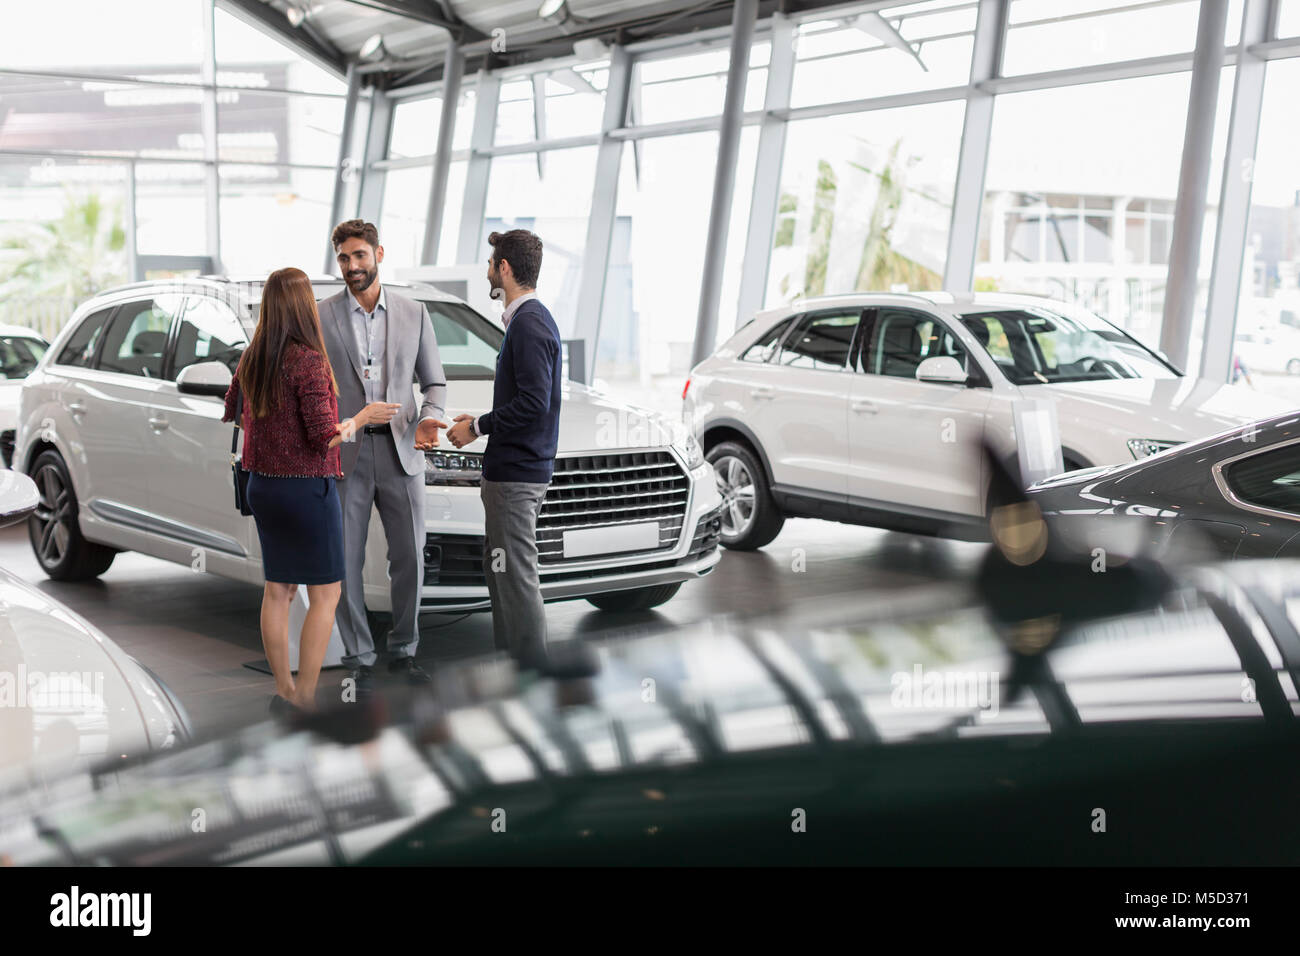 Car salesman talking to couple customers in car dealership showroom Stock Photo